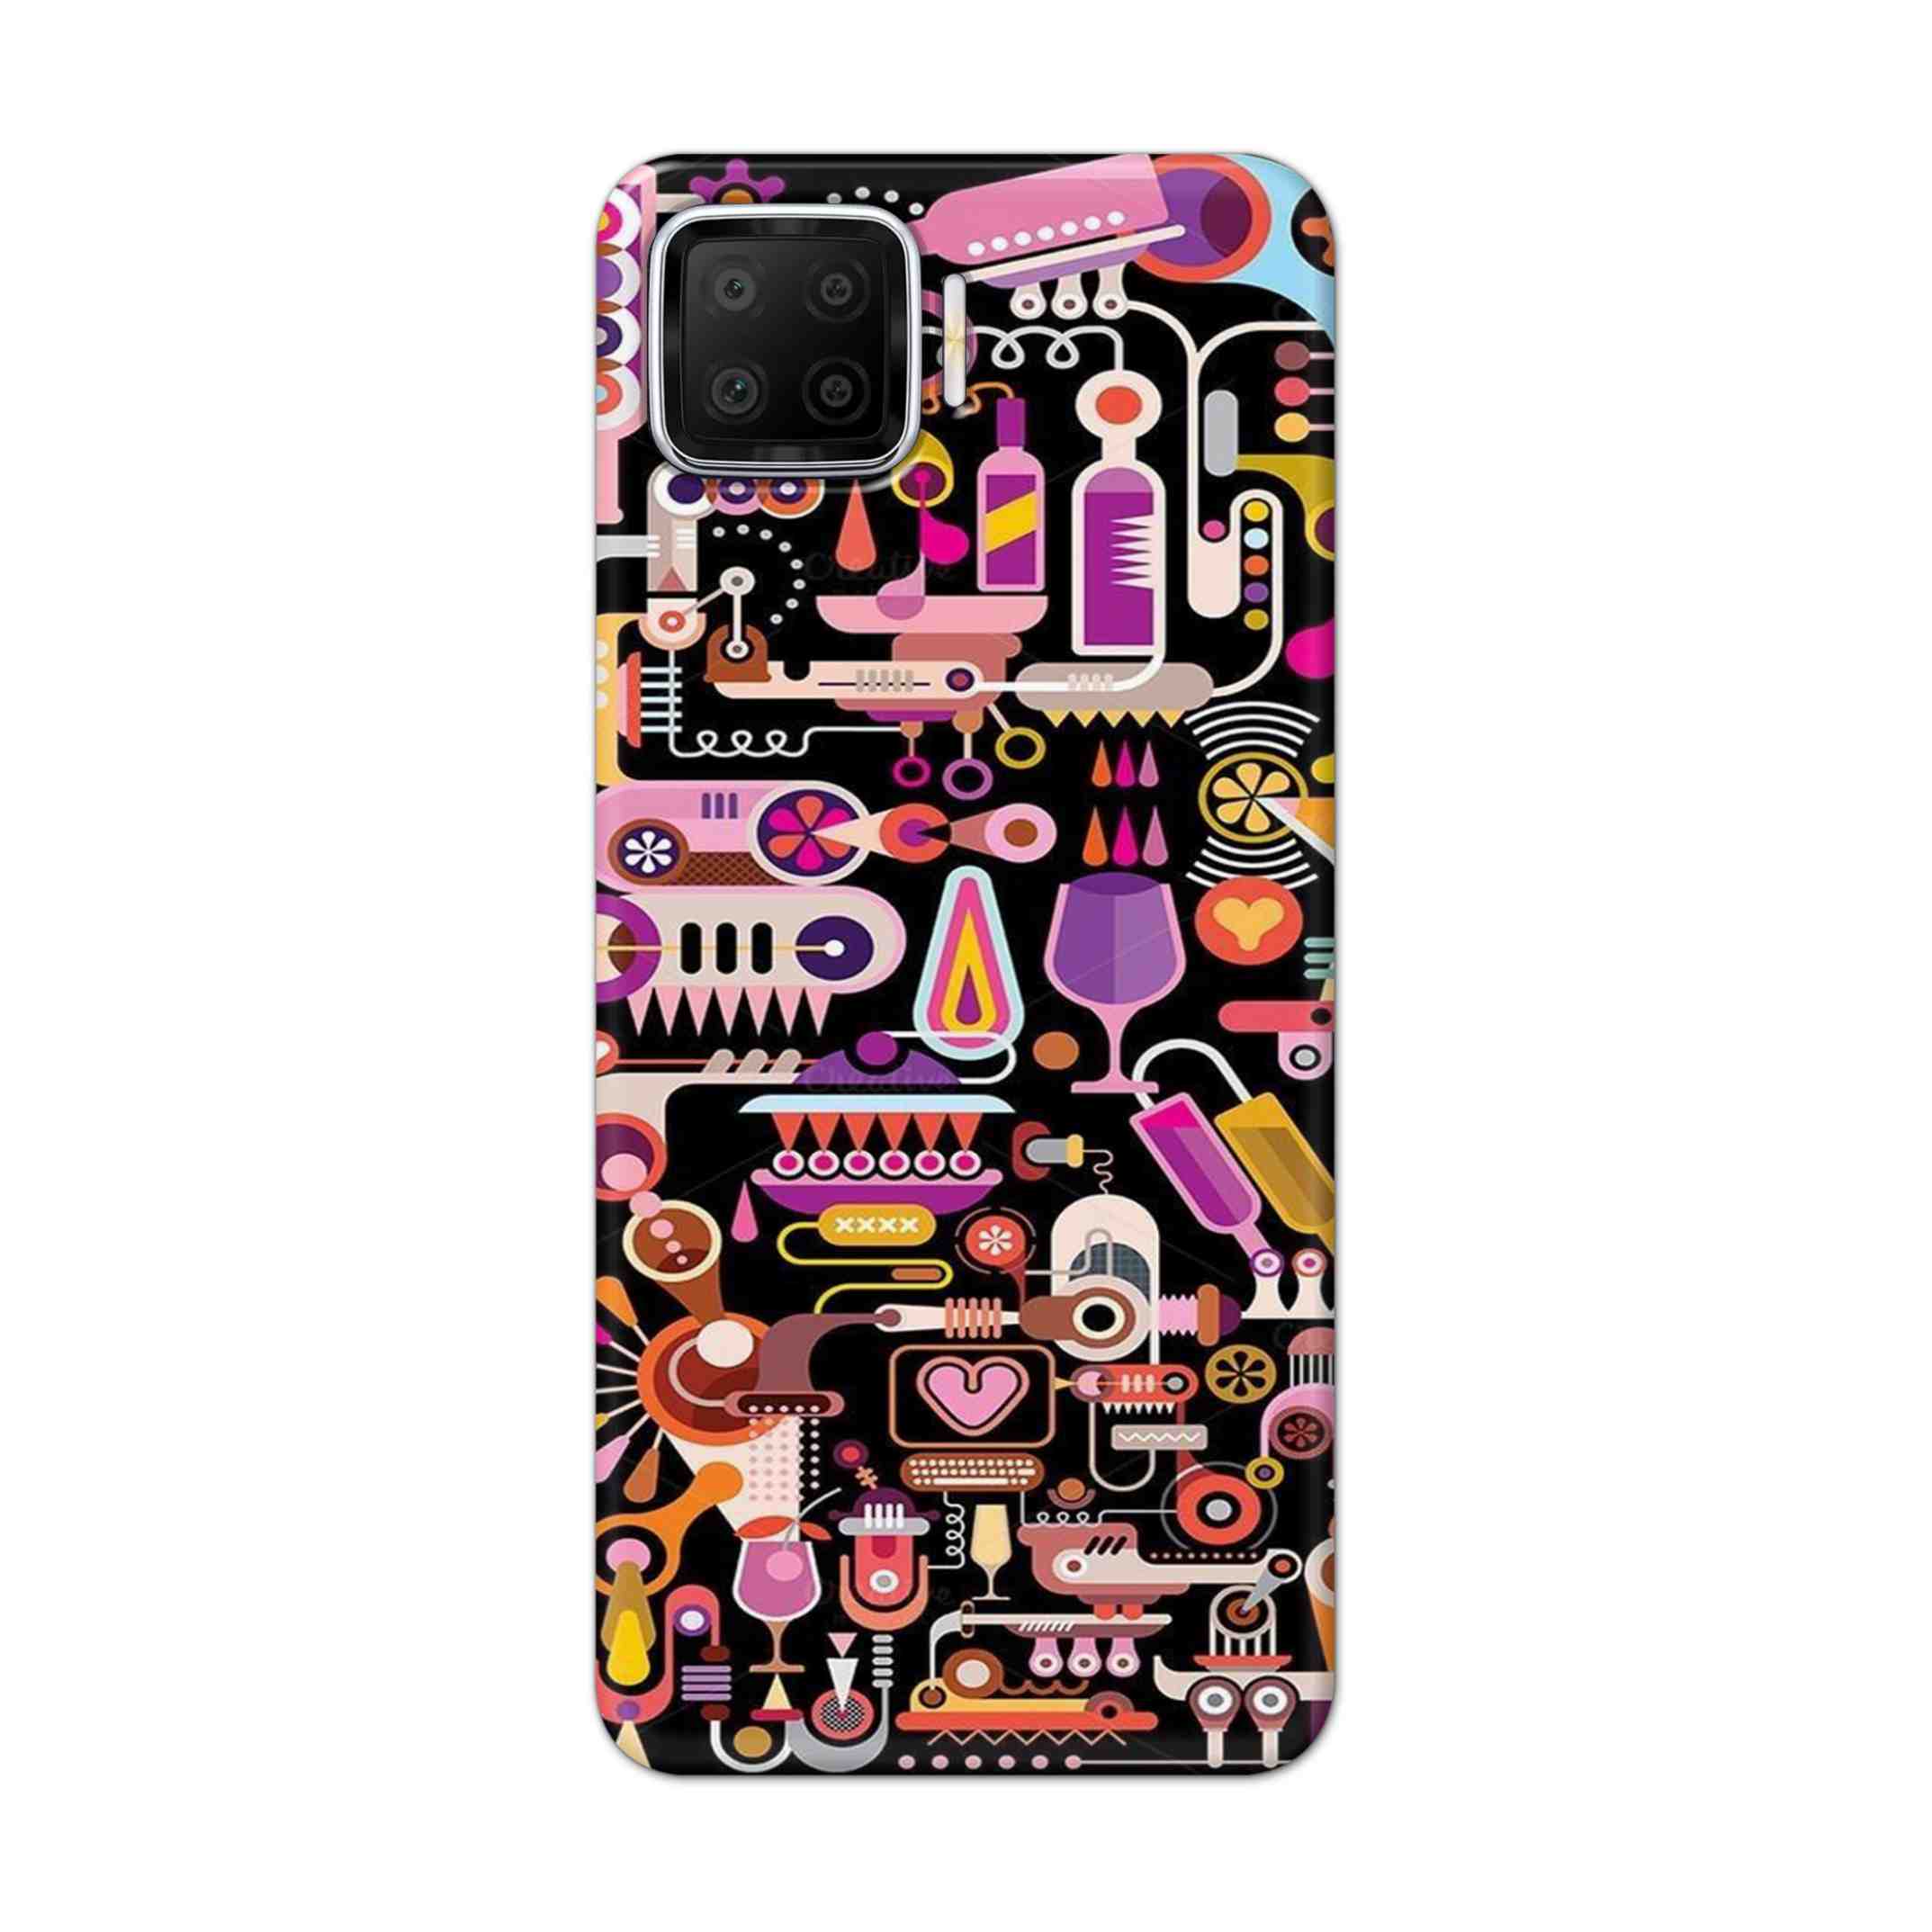 Buy Lab Art Hard Back Mobile Phone Case Cover For Oppo F17 Online